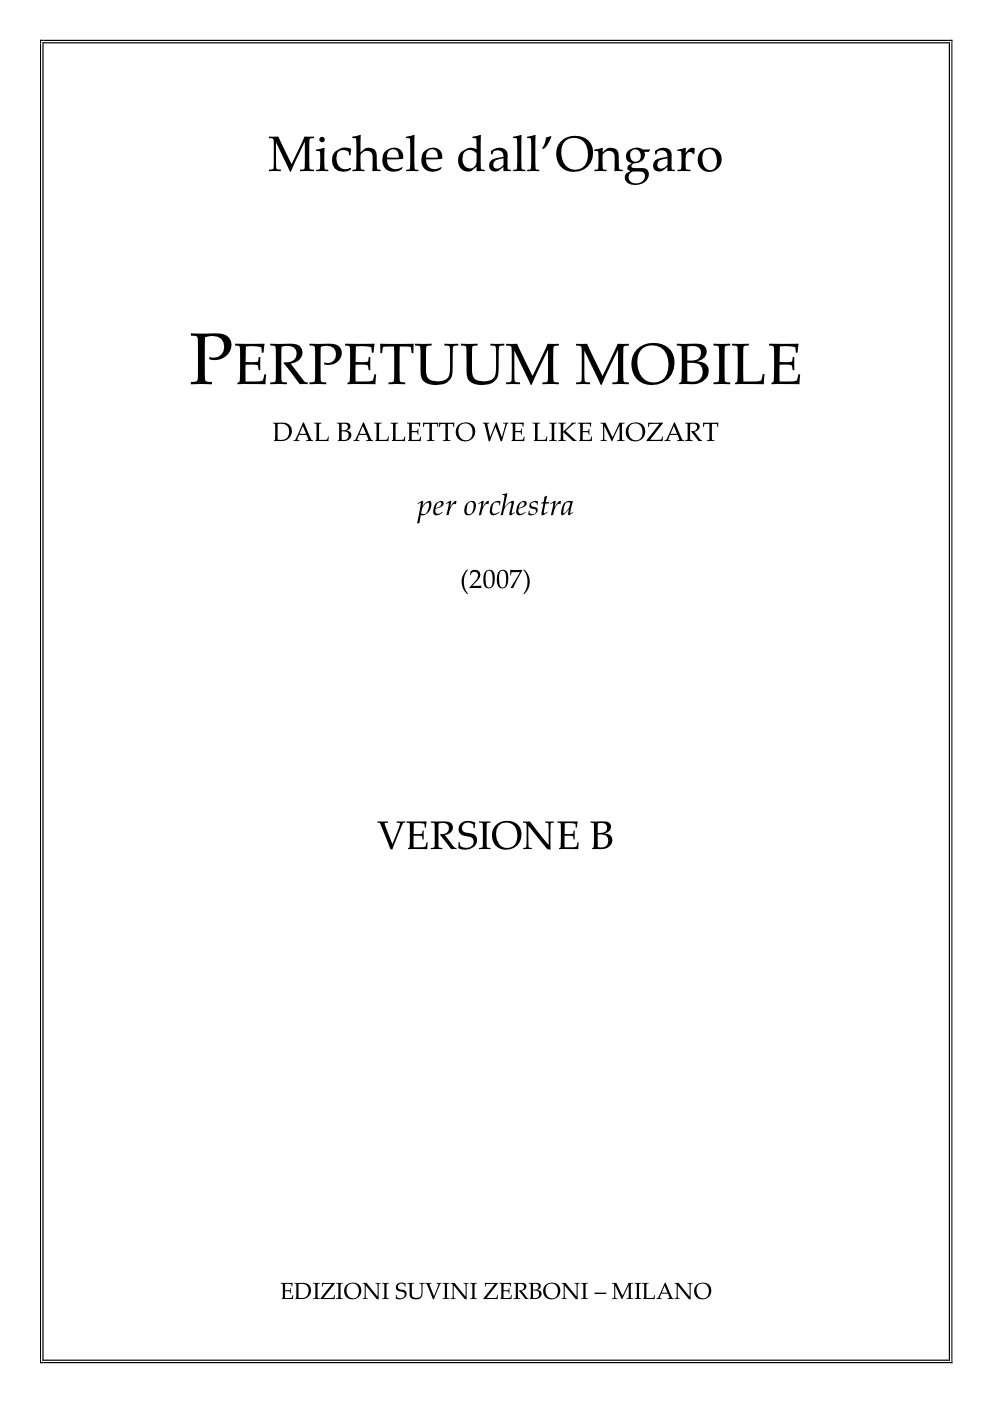 Perpetuum mobile dal balletto We like Mozart_Versione B_Dall Ongaro 1